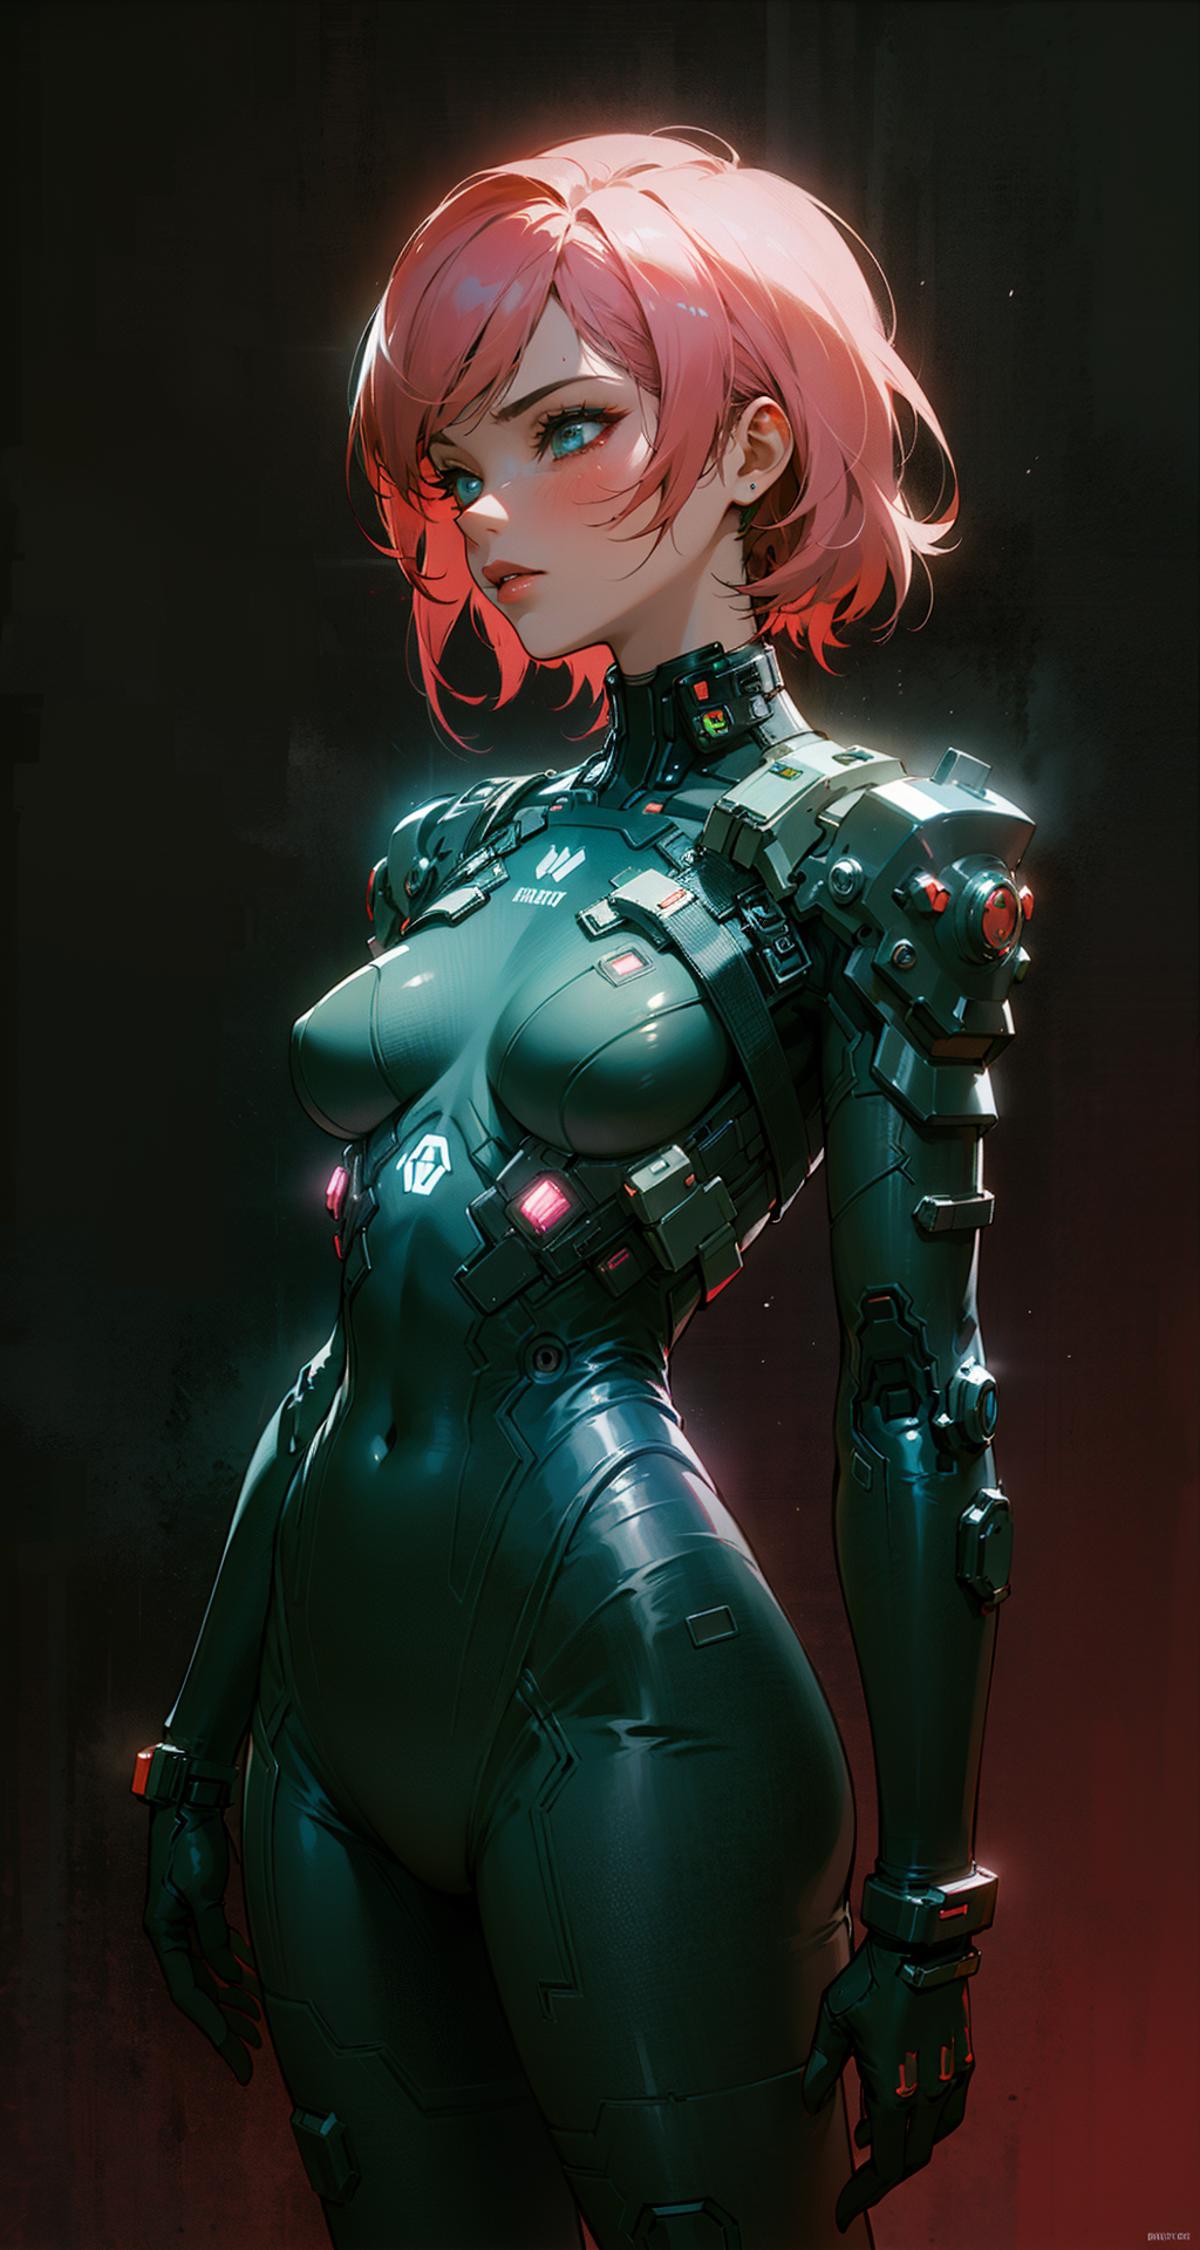 Cyberpunk Bodysuit image by Roscosmos